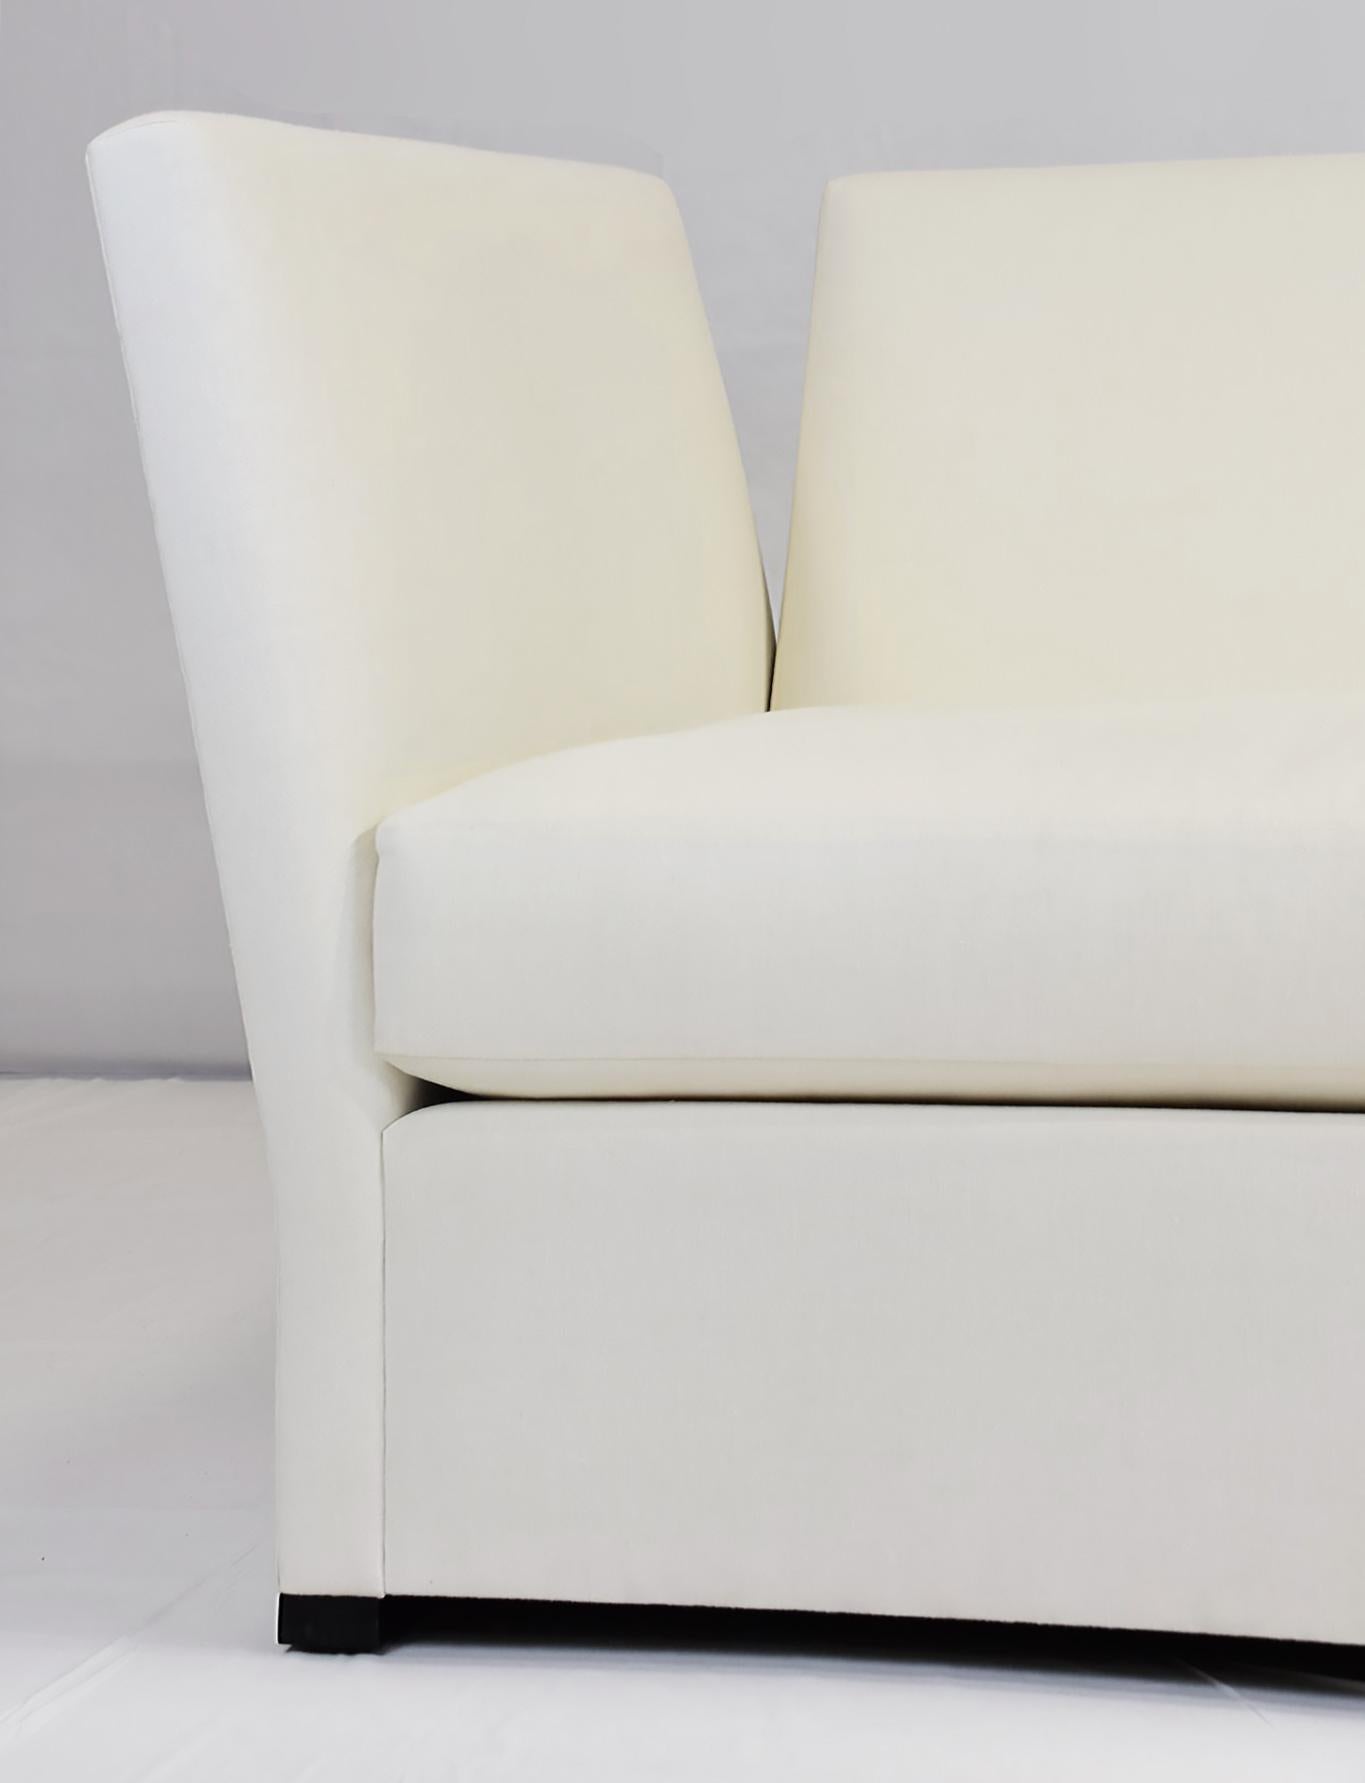 American Le Jeune Upholstery Jones Angled Arm Sofa Showroom Model For Sale